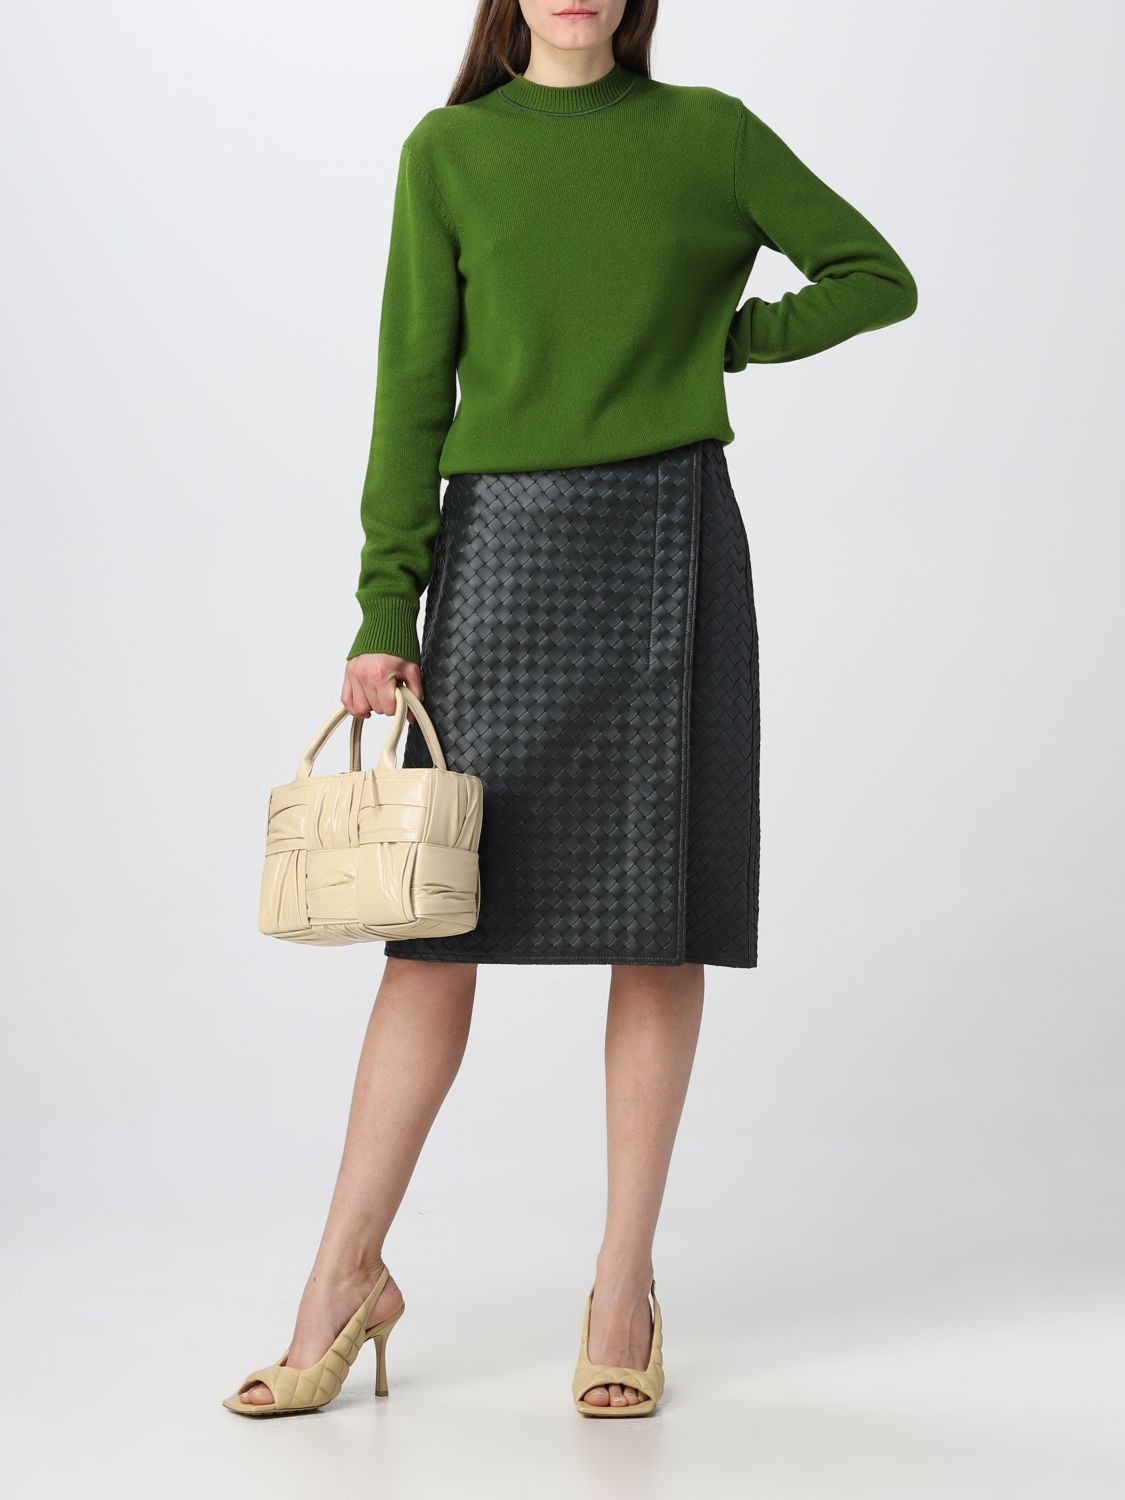 BOTTEGA VENETA: cashmere pullover - Green | Bottega Veneta sweater